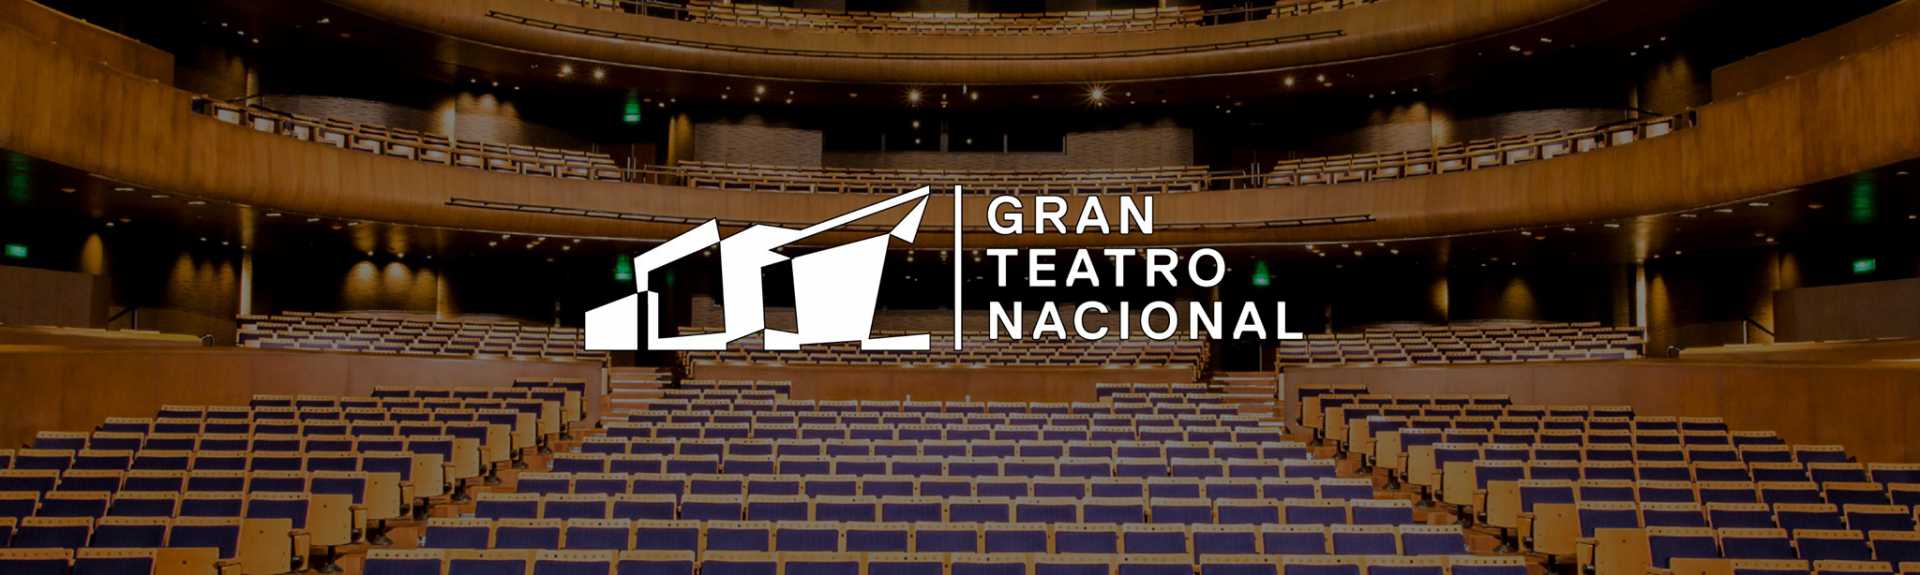 Gran Teatro Nacional VR